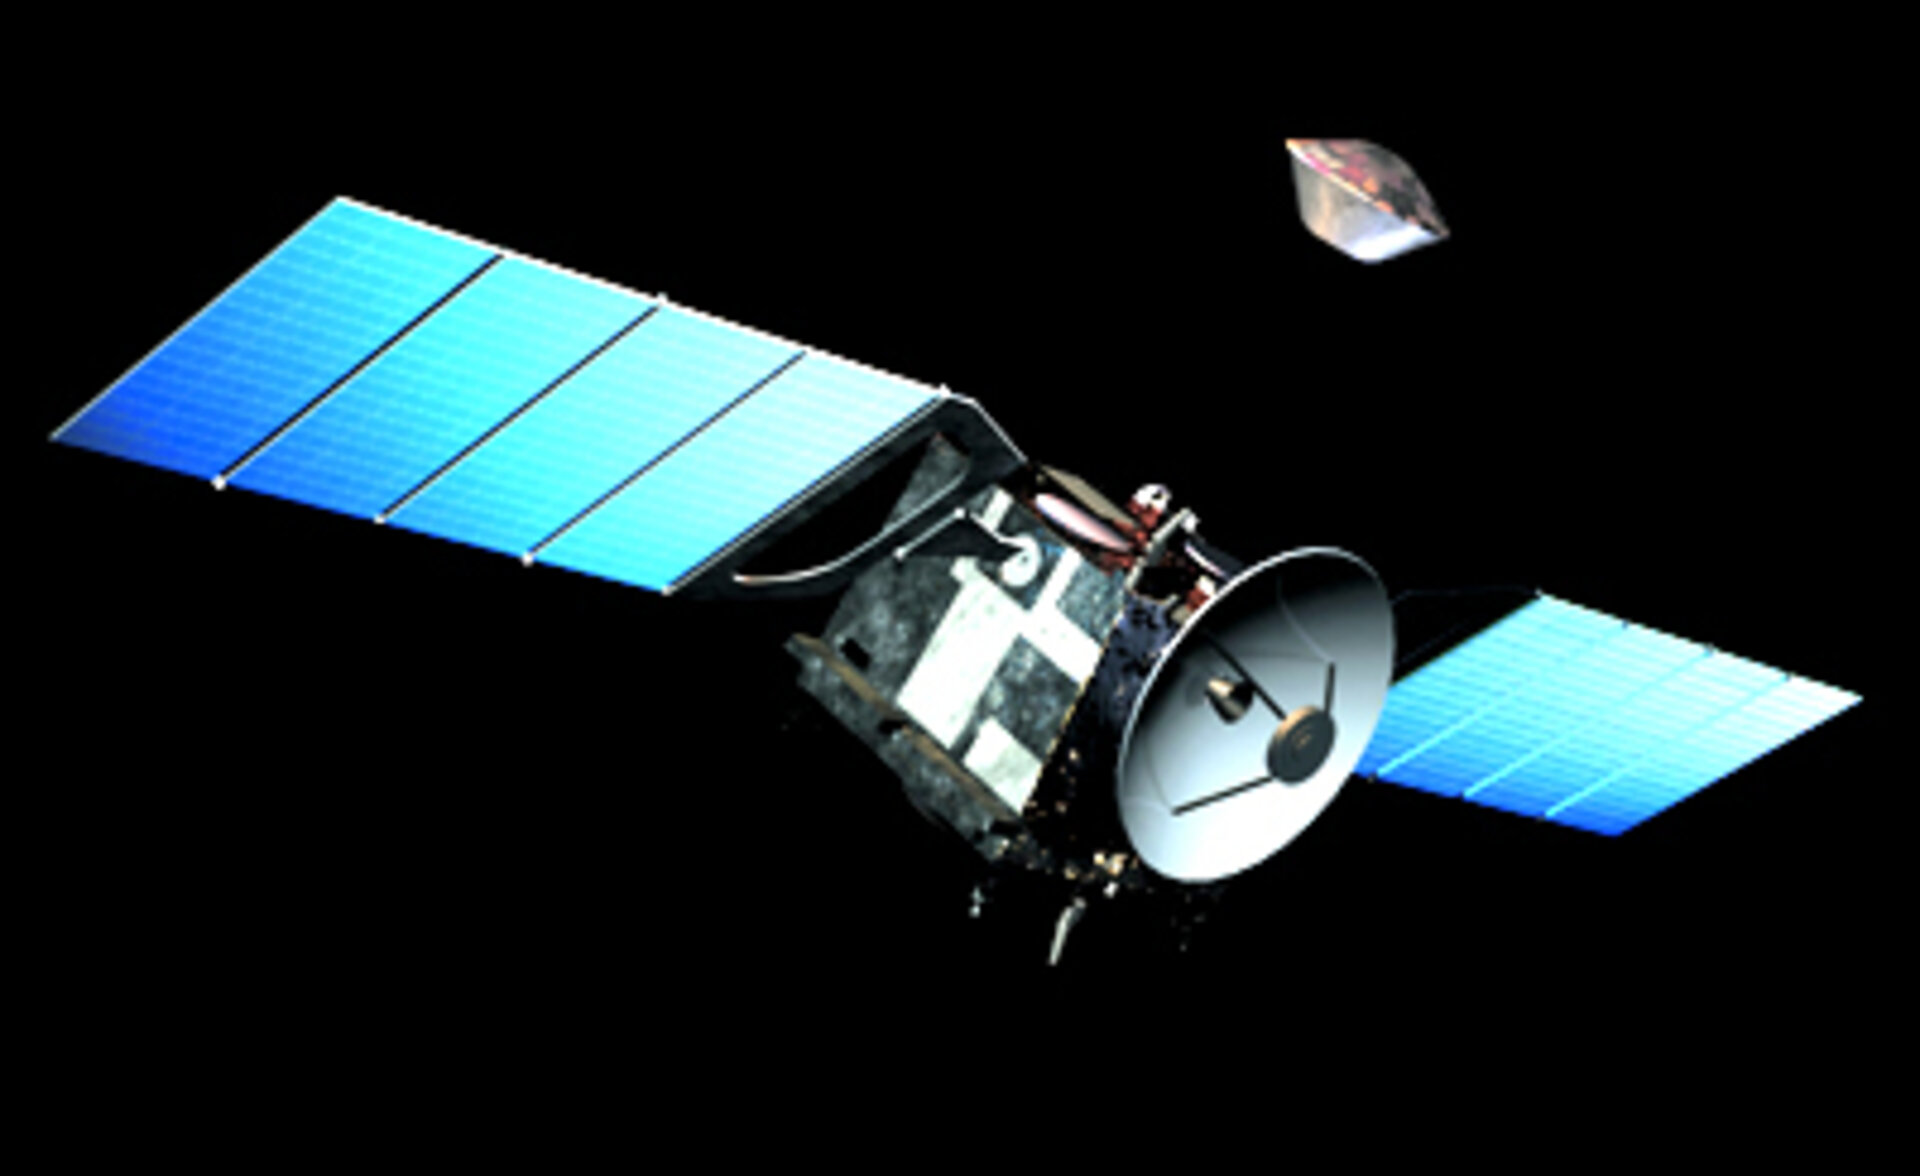 Beagle 2 lander leaving the Mars Express orbiter